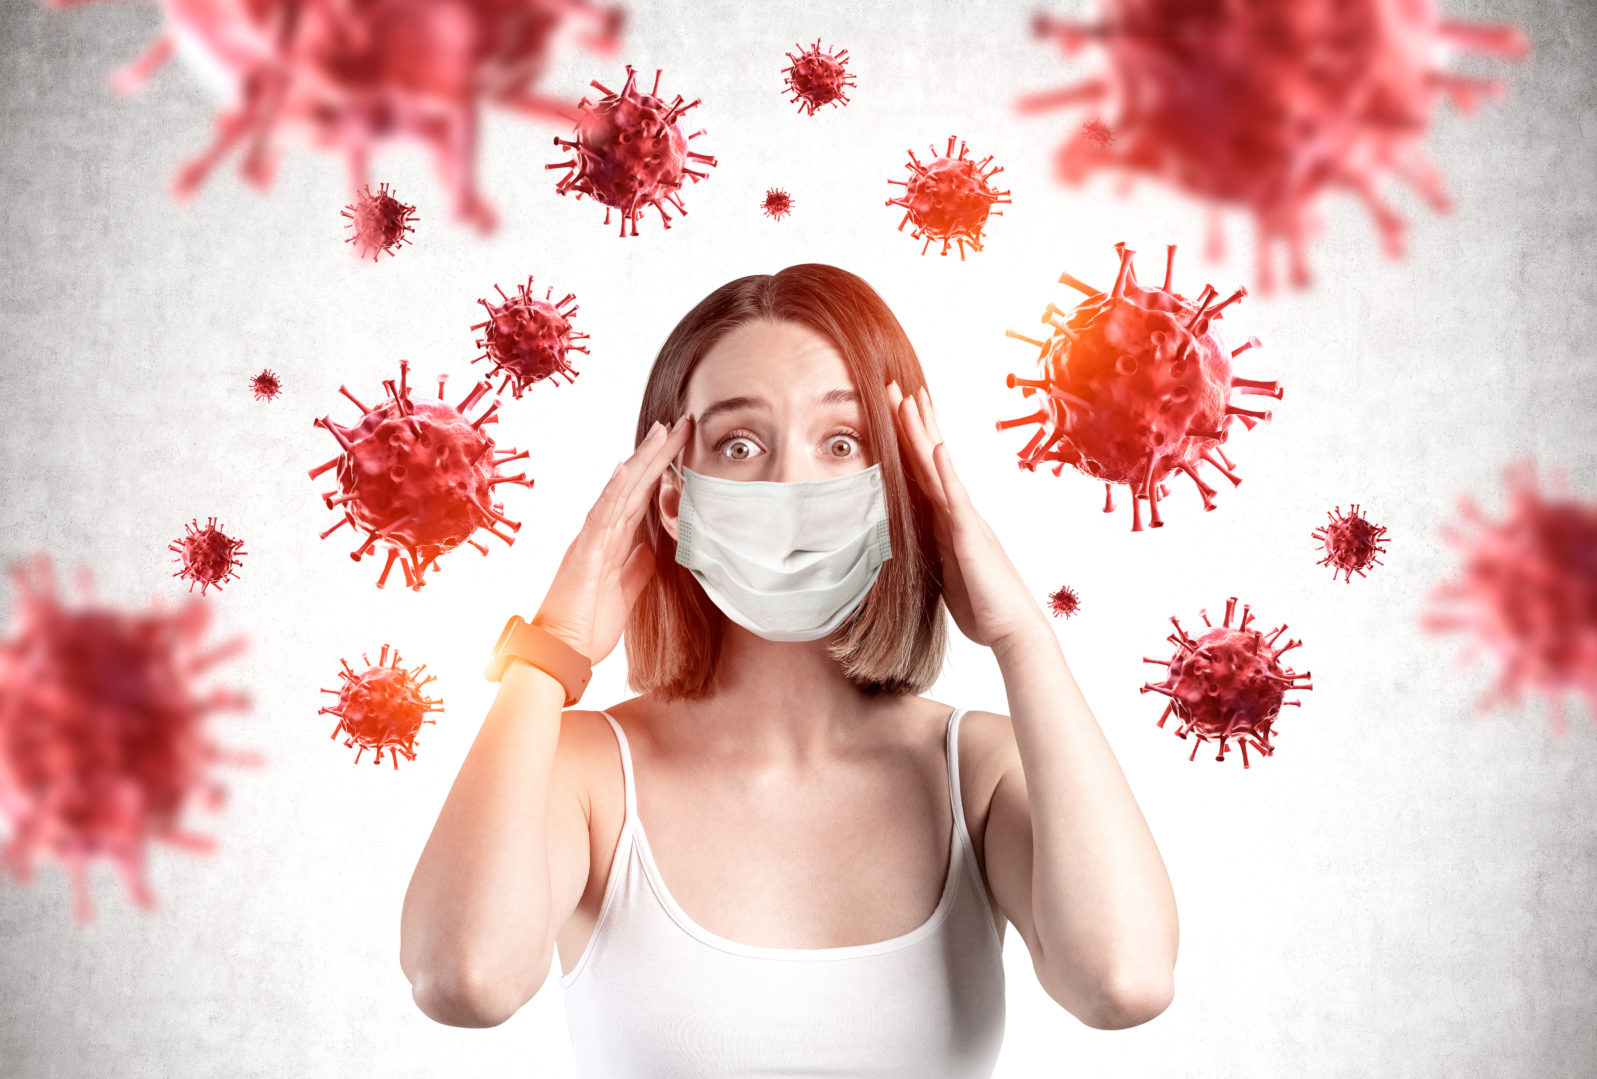 Scared young girl in mask, coronavirus panic